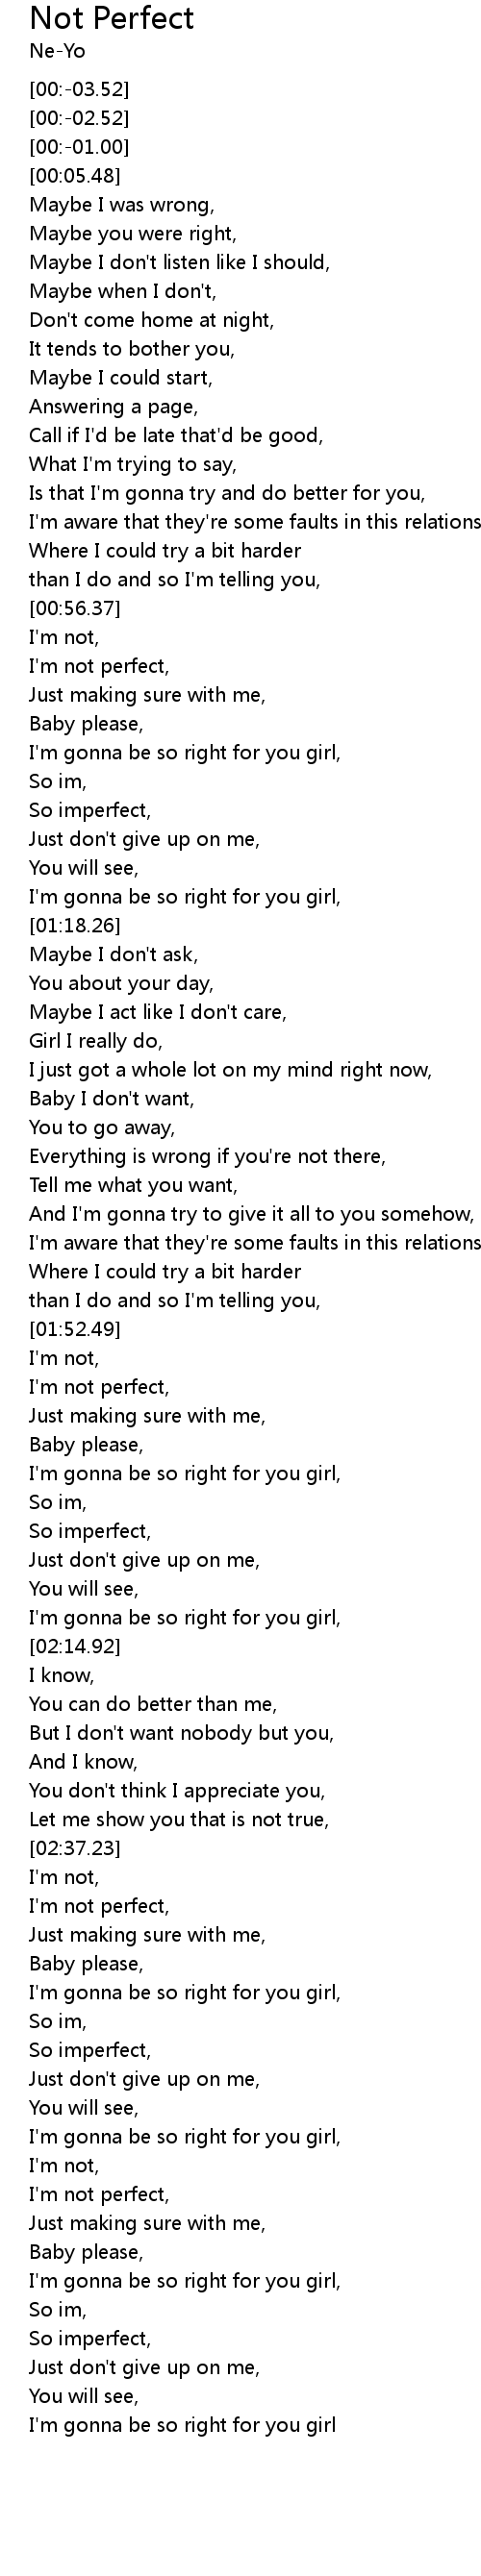 Lyrics perfect One Direction